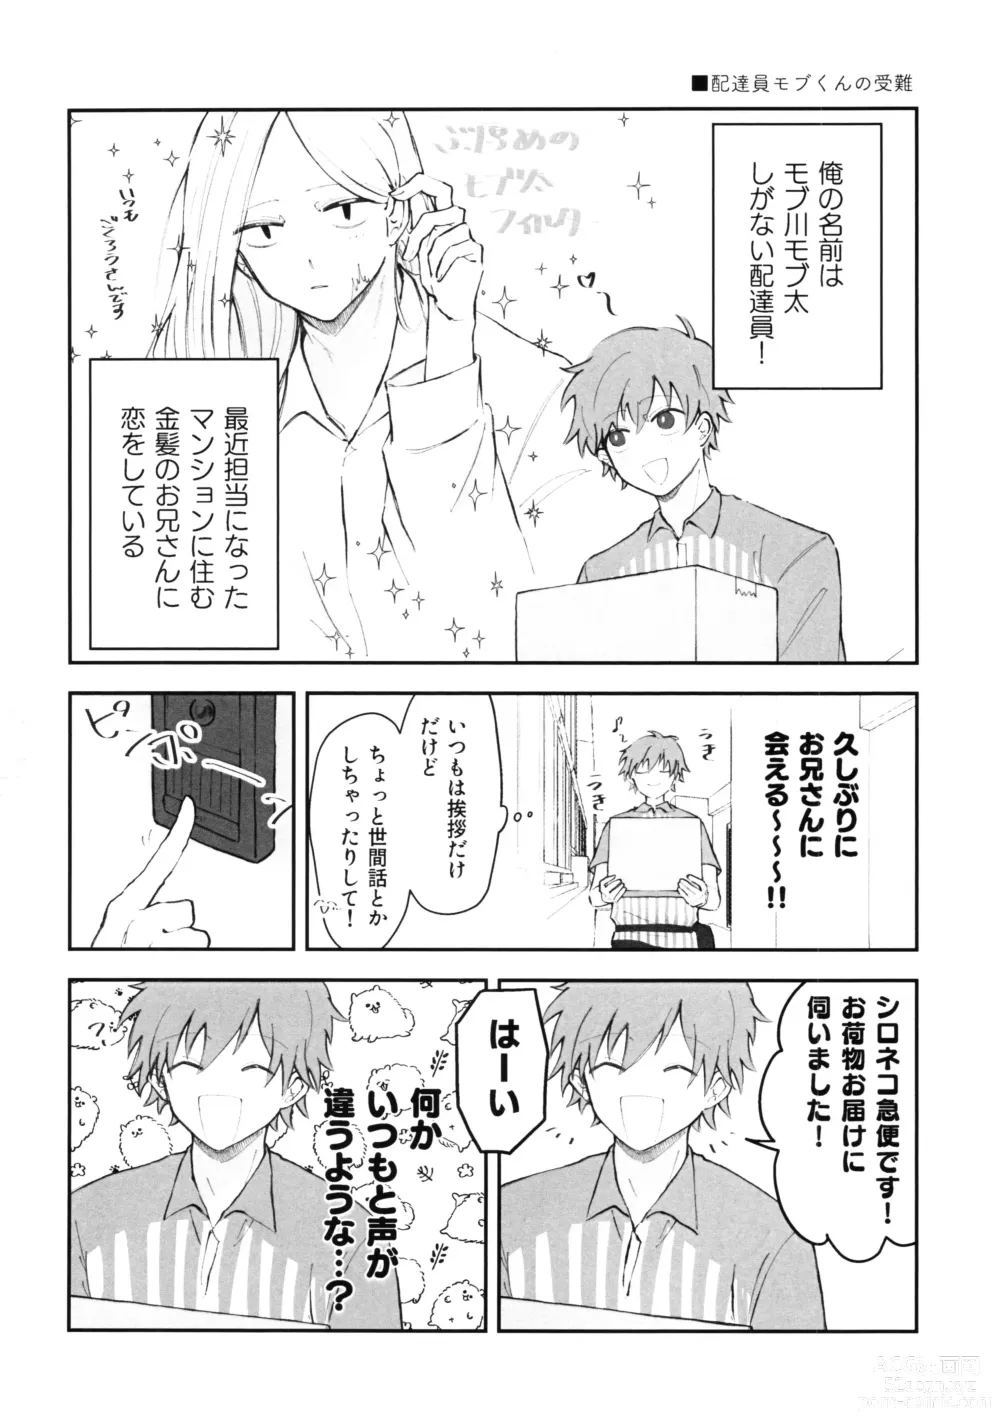 Page 13 of doujinshi NGSS LOG 1